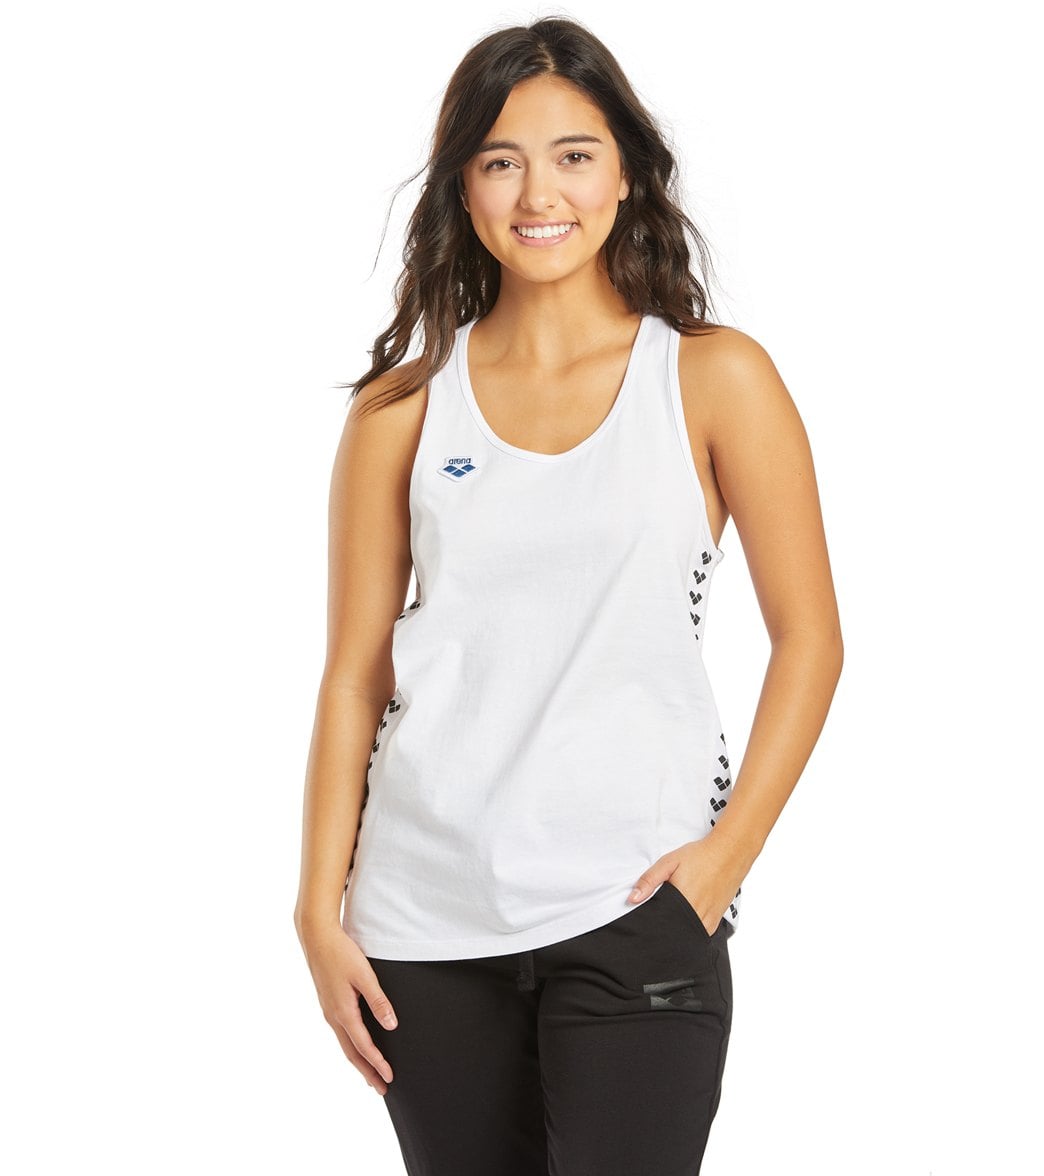 Arena Women's Team Tank Top - White/White/Black Large Size Large Cotton - Swimoutlet.com